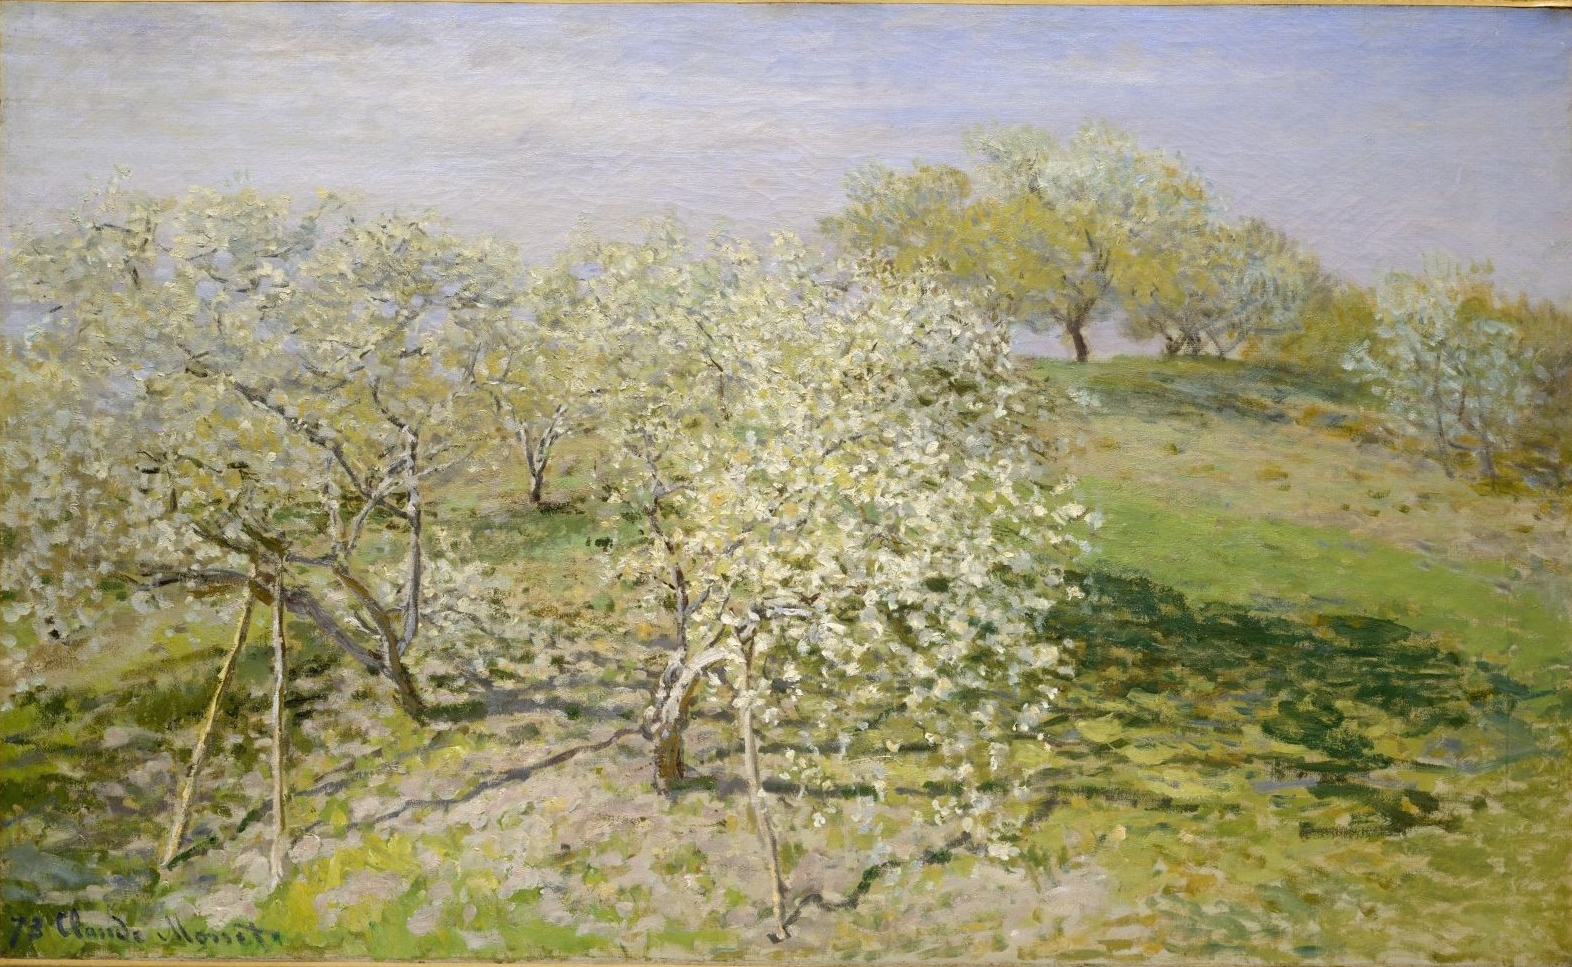 Claude+Monet-1840-1926 (702).jpg